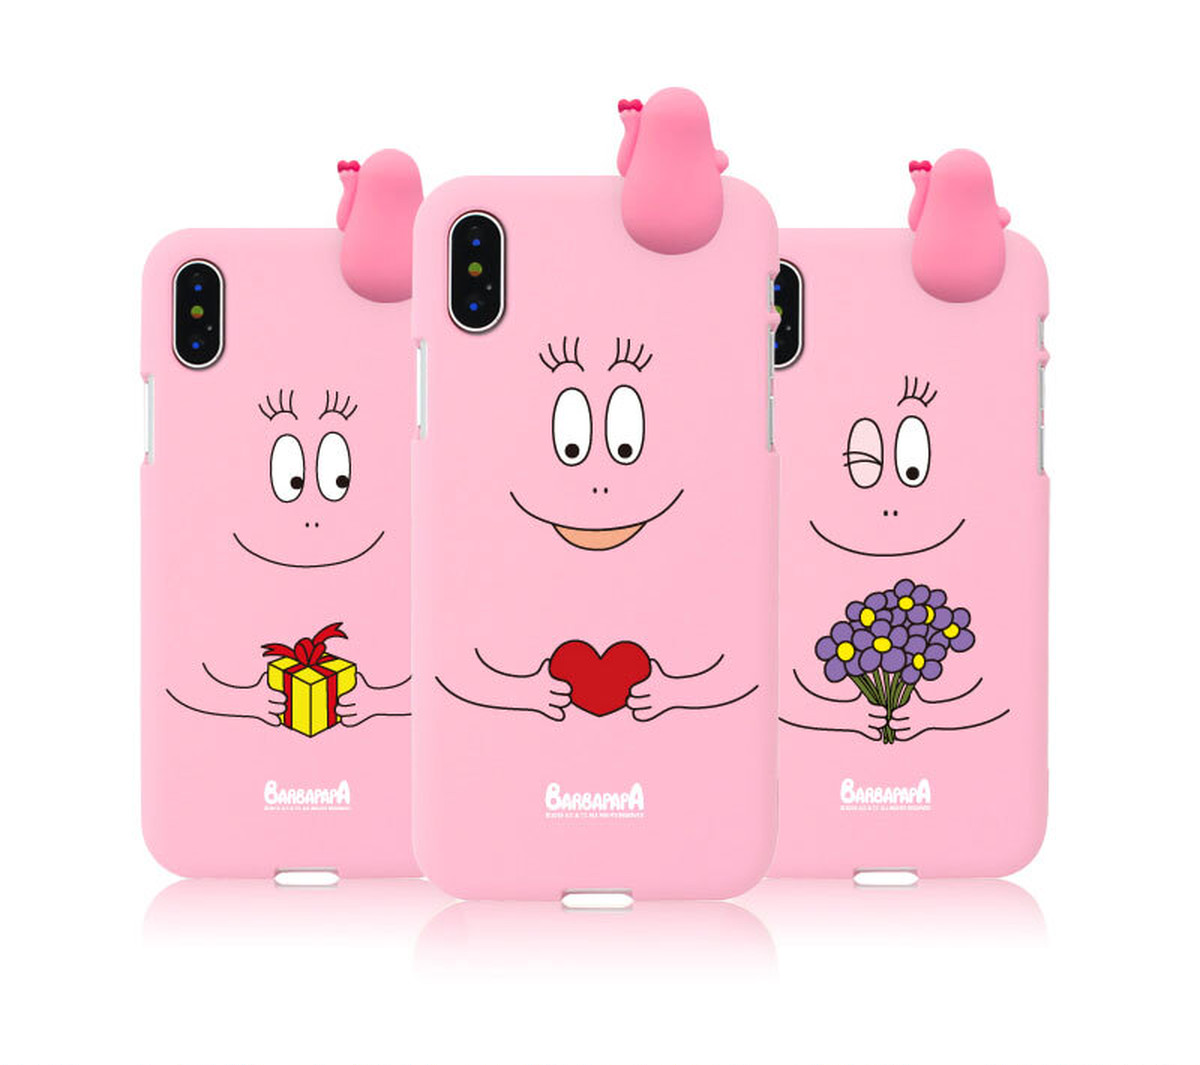 Try Cozy Iphone12 12pro Mini Promax Pink Cuteフィギア ソフト Iphone スマホケース ピンク Pink ガーリー シリコン Tpu カワイイ P0000cno Hanholic Jp Iphoneケース スマホアクセサリー 輸入雑貨